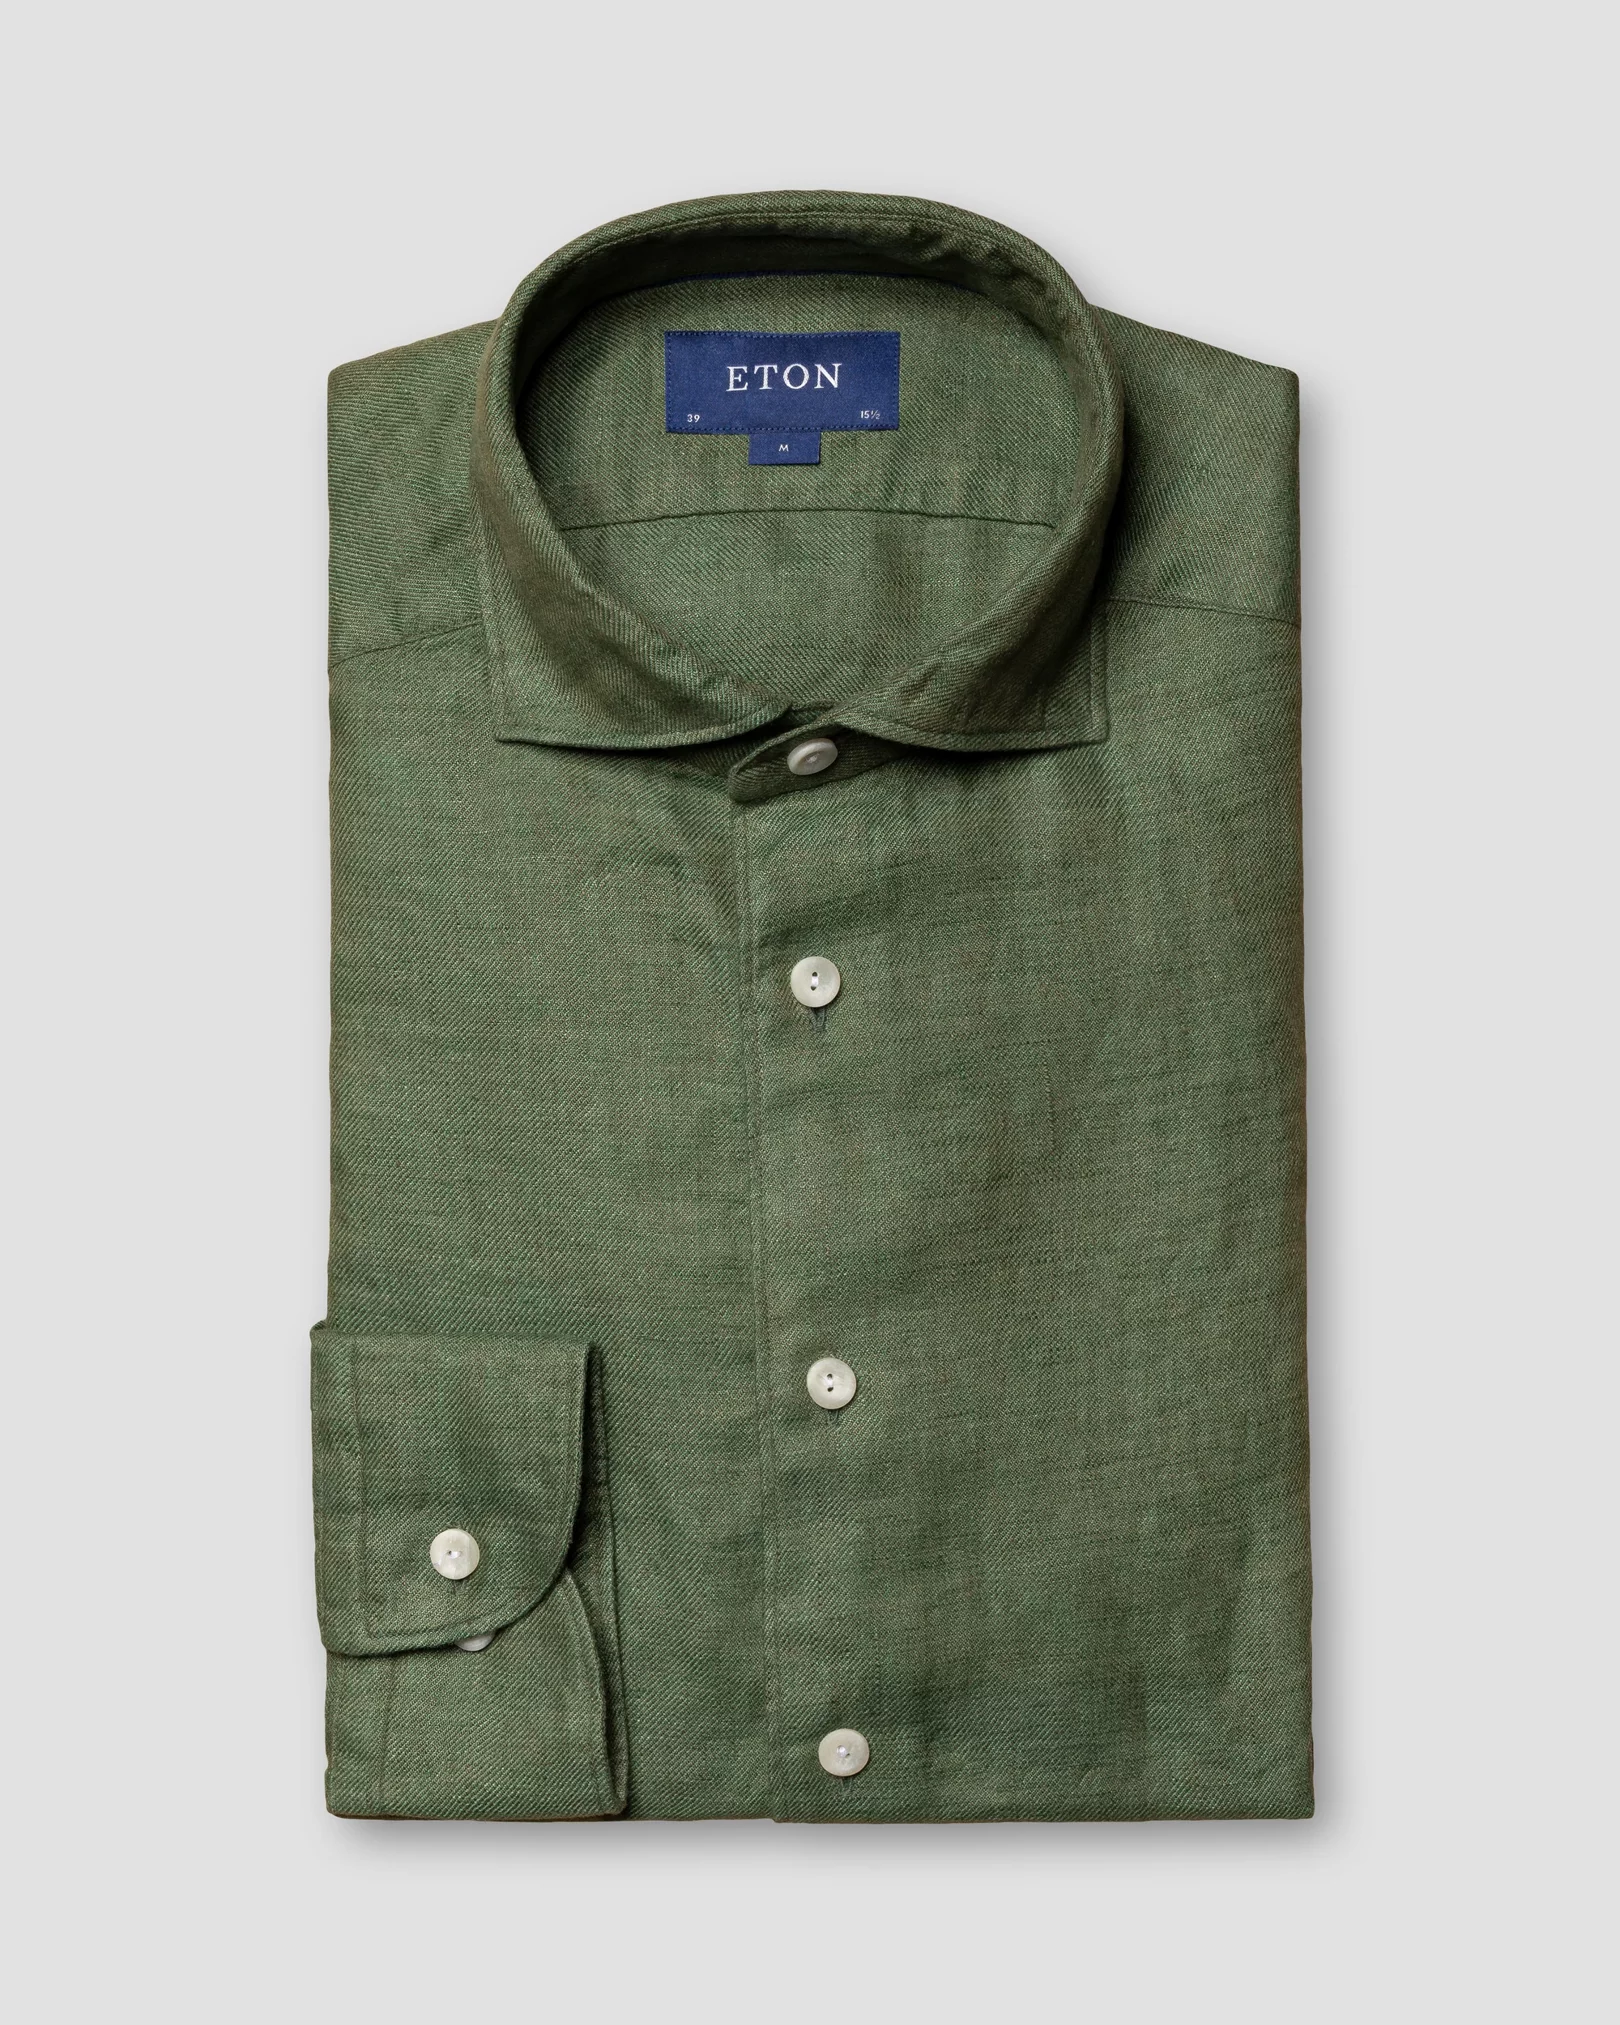 Eton - dark green linen